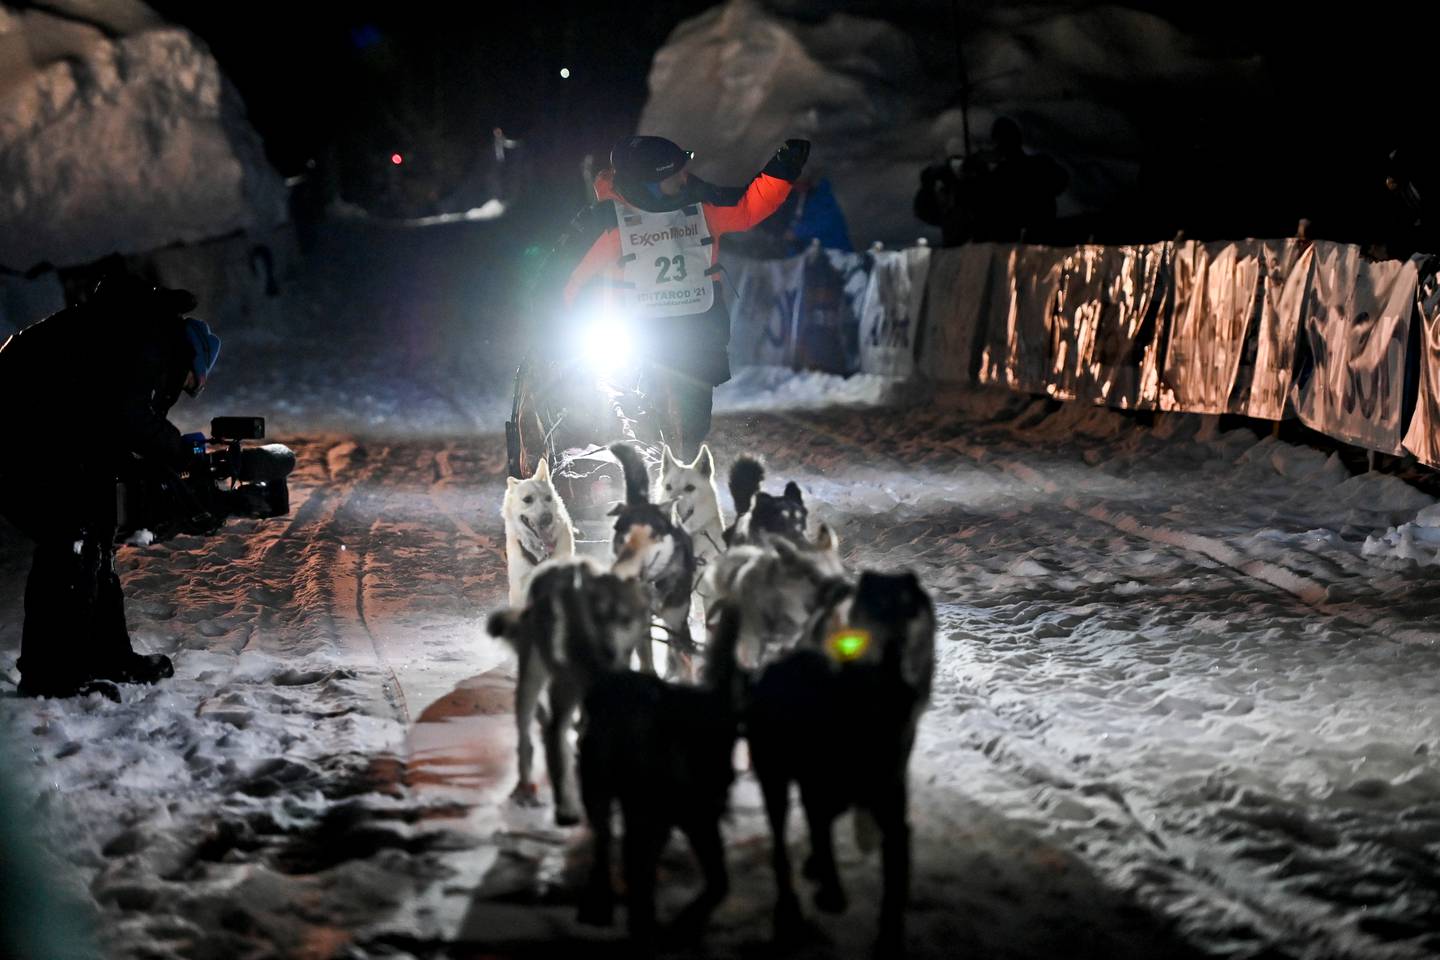 Dallas Seavey, Iditarod, sled dog race